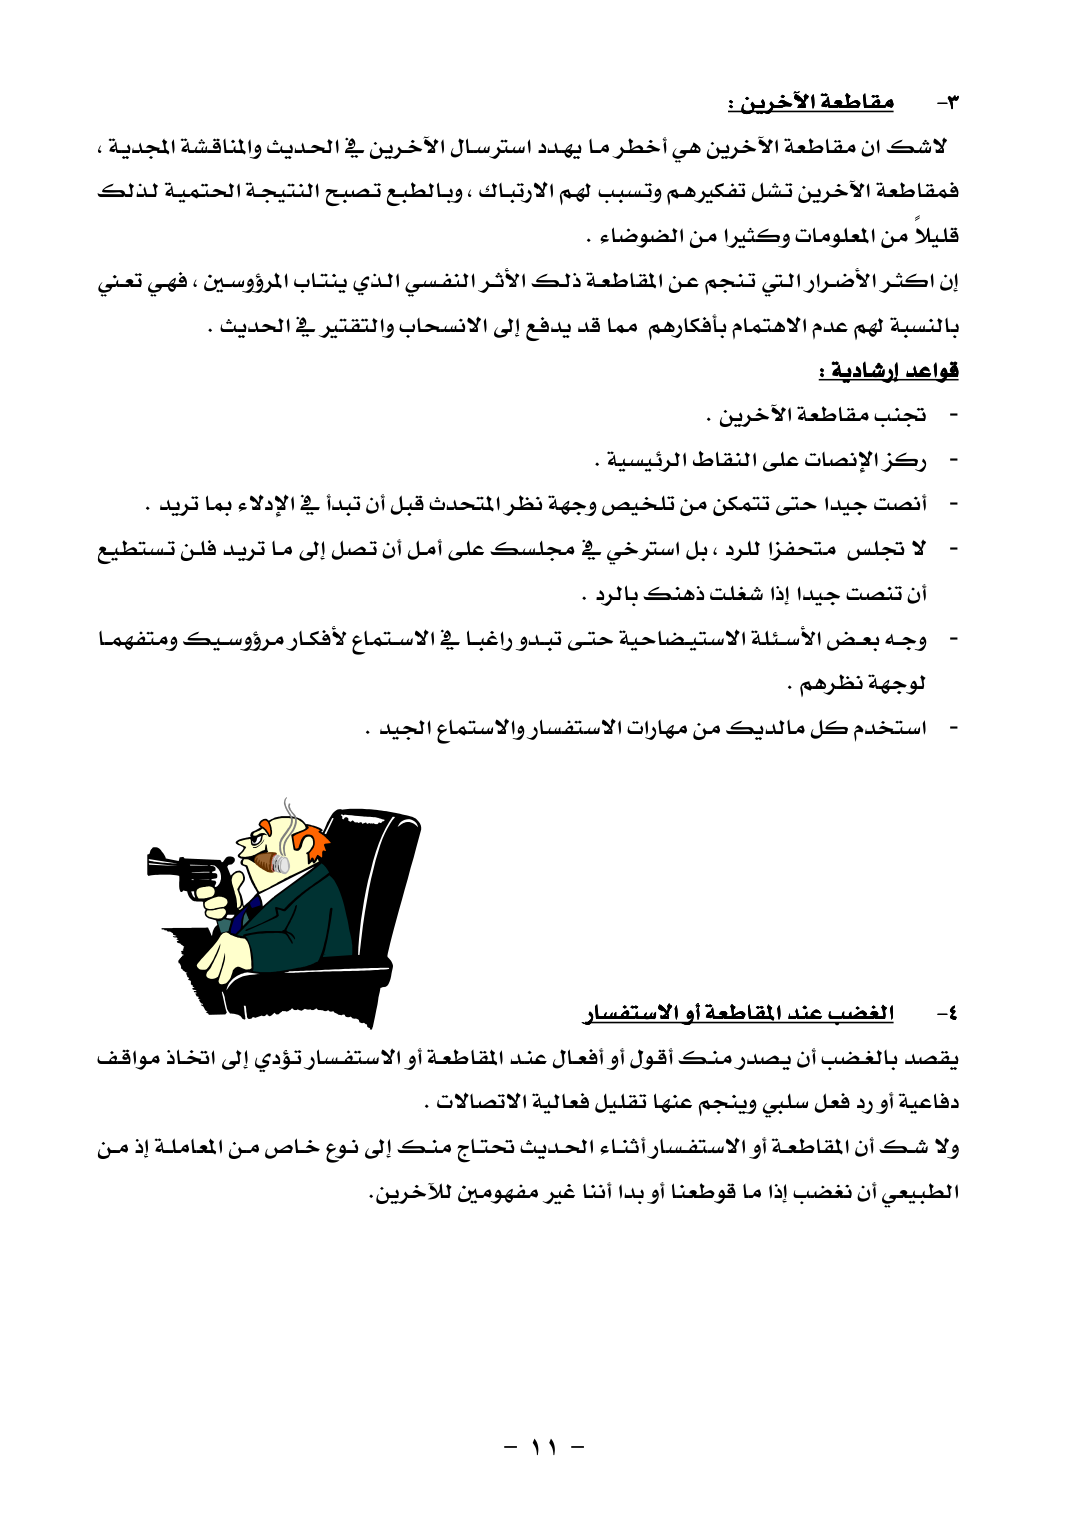 arabicpdfs.com الحقائب التدريبية للمتزوجين والمتزوجات والأباء والأمهات عدة مدربين ومدربات.PDF مهارات الاتصال الفعال